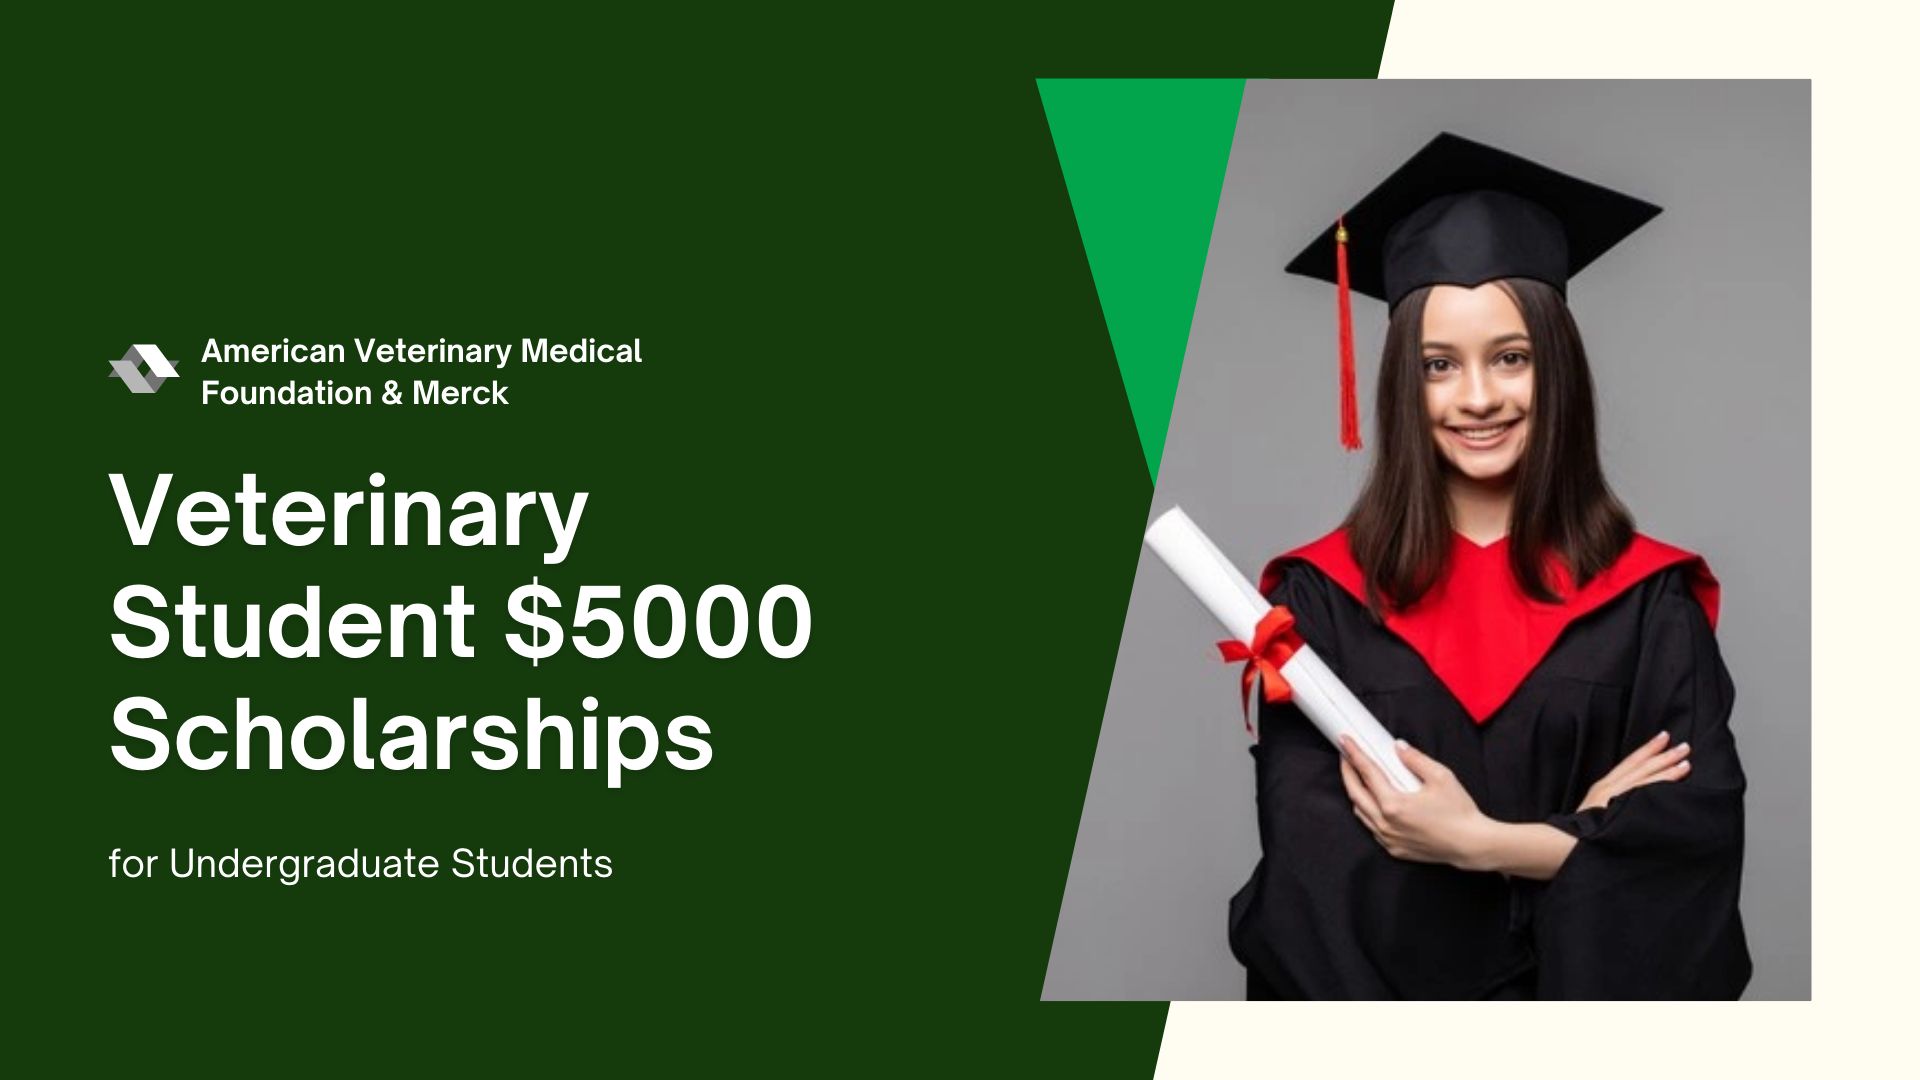 Veterinary Student $5000 Scholarships for Undergraduate Students